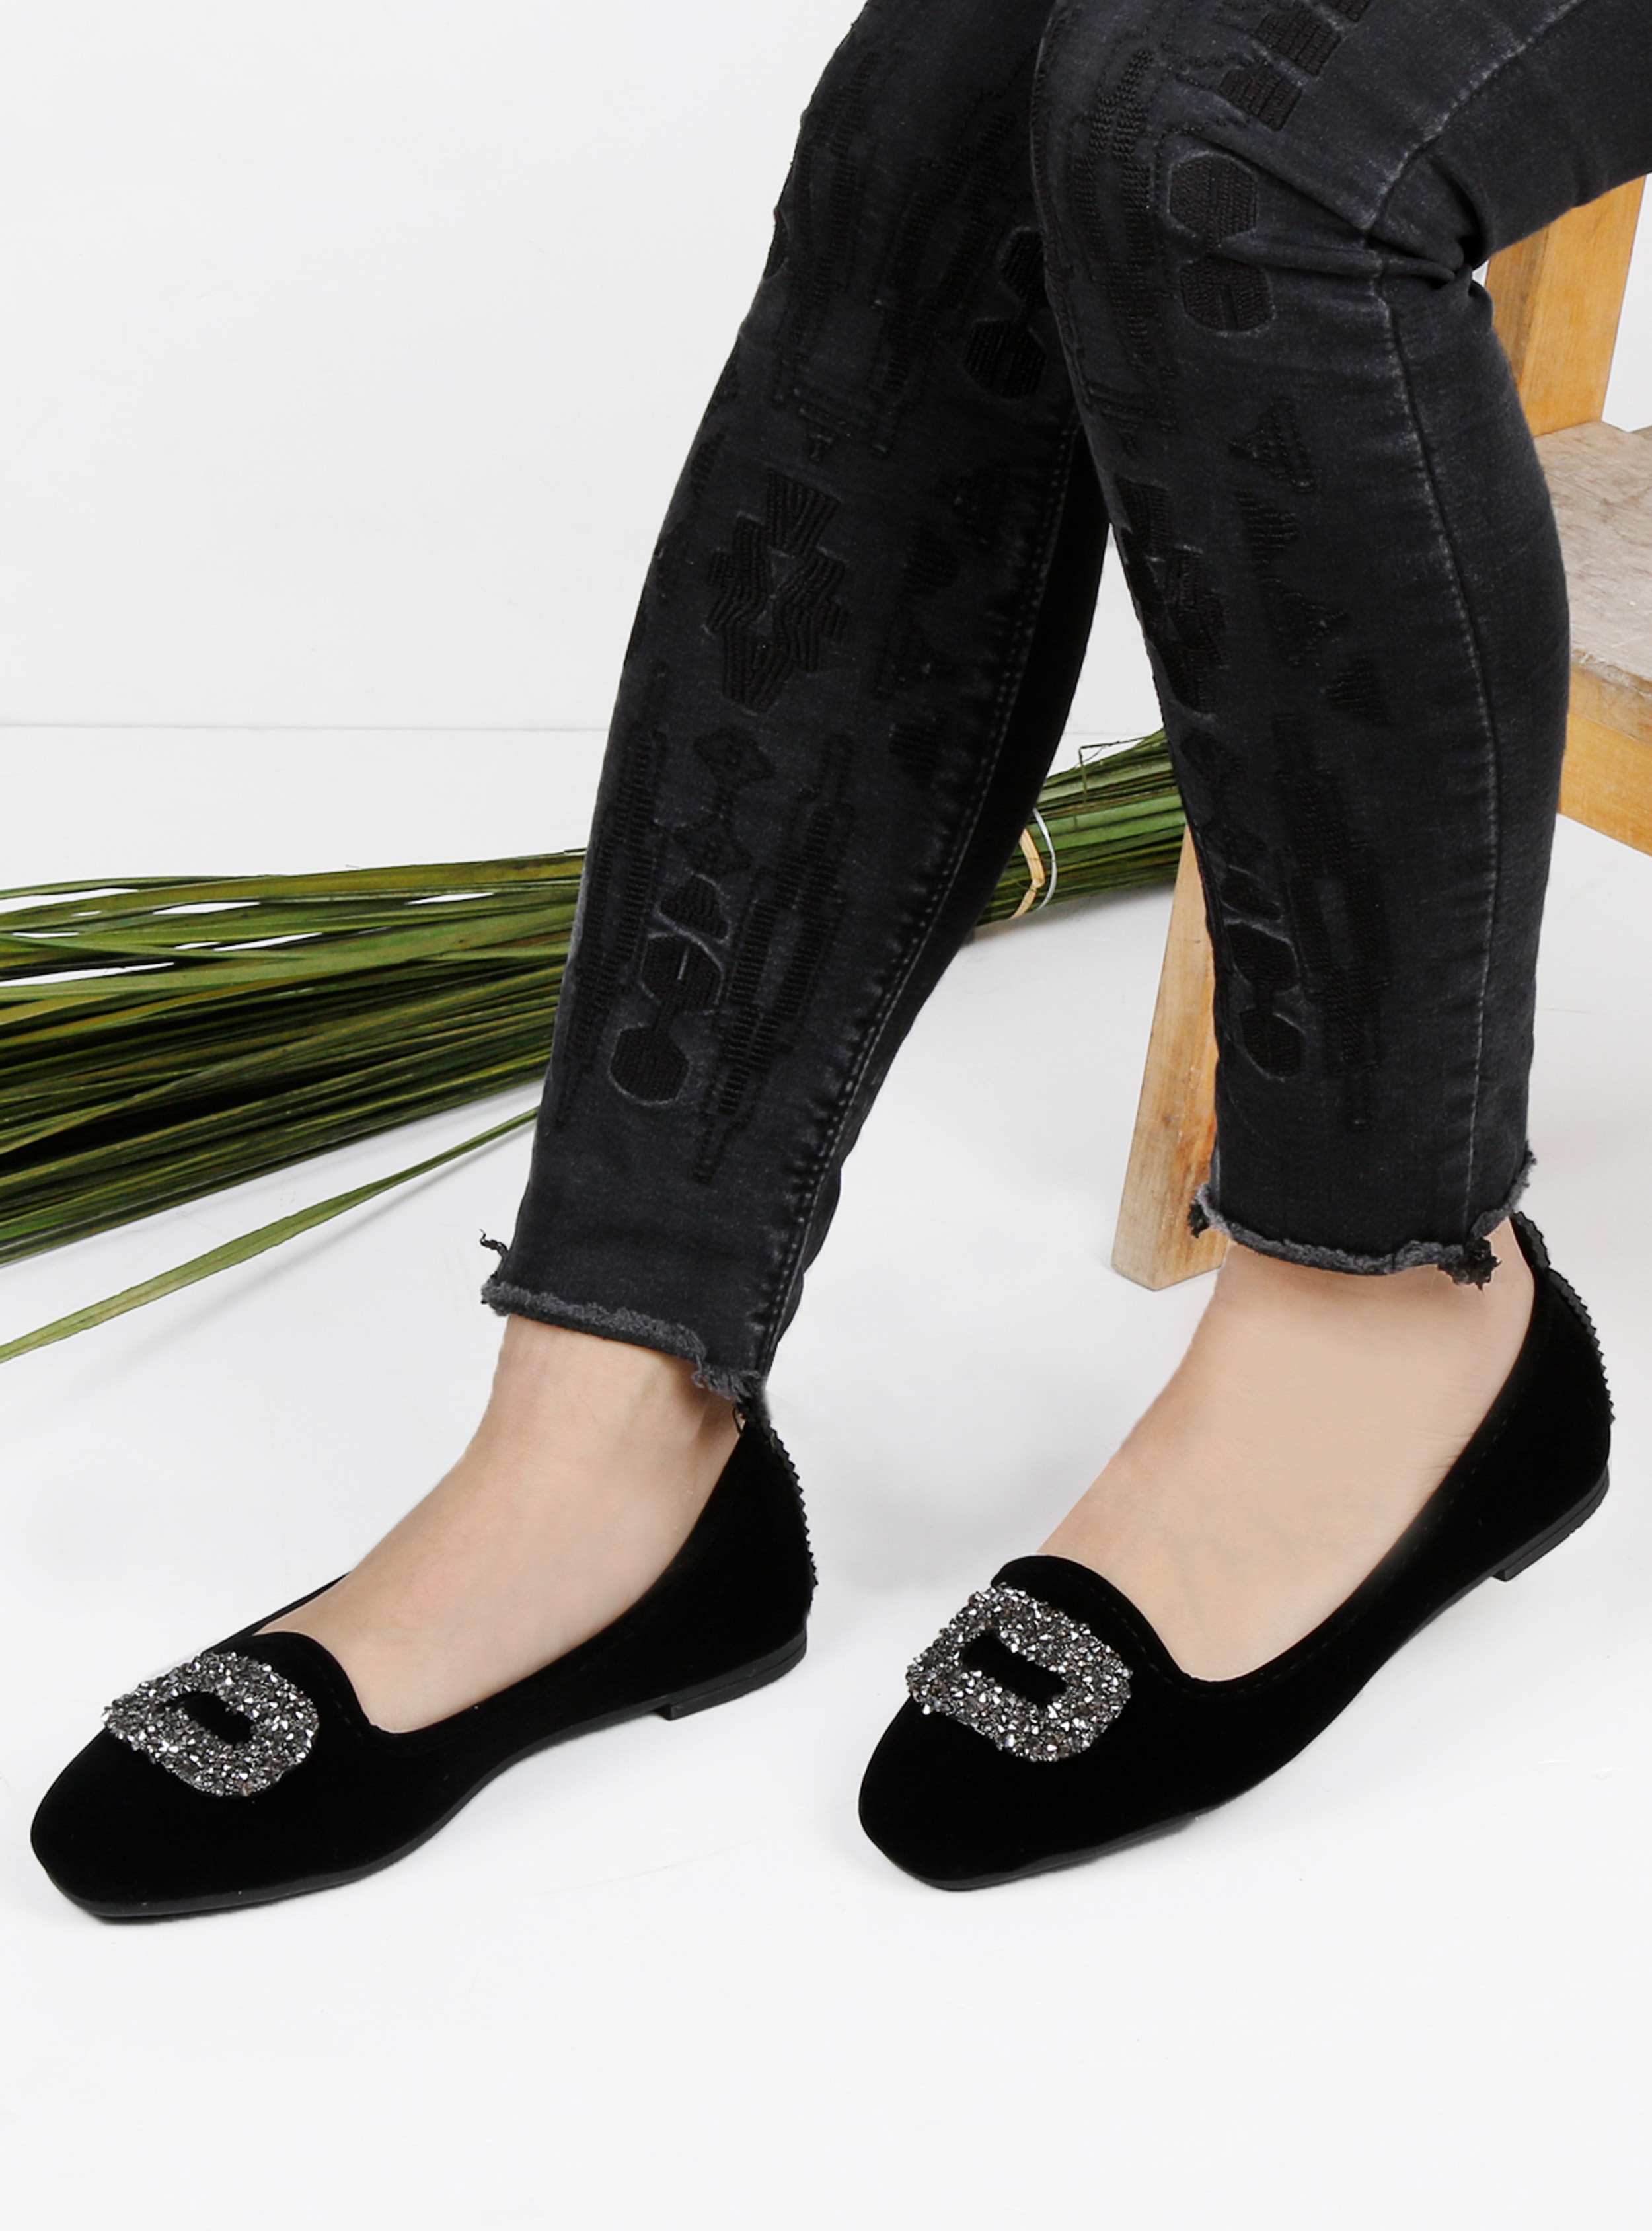 Black - Silver Color - Loafer - Flat Shoes